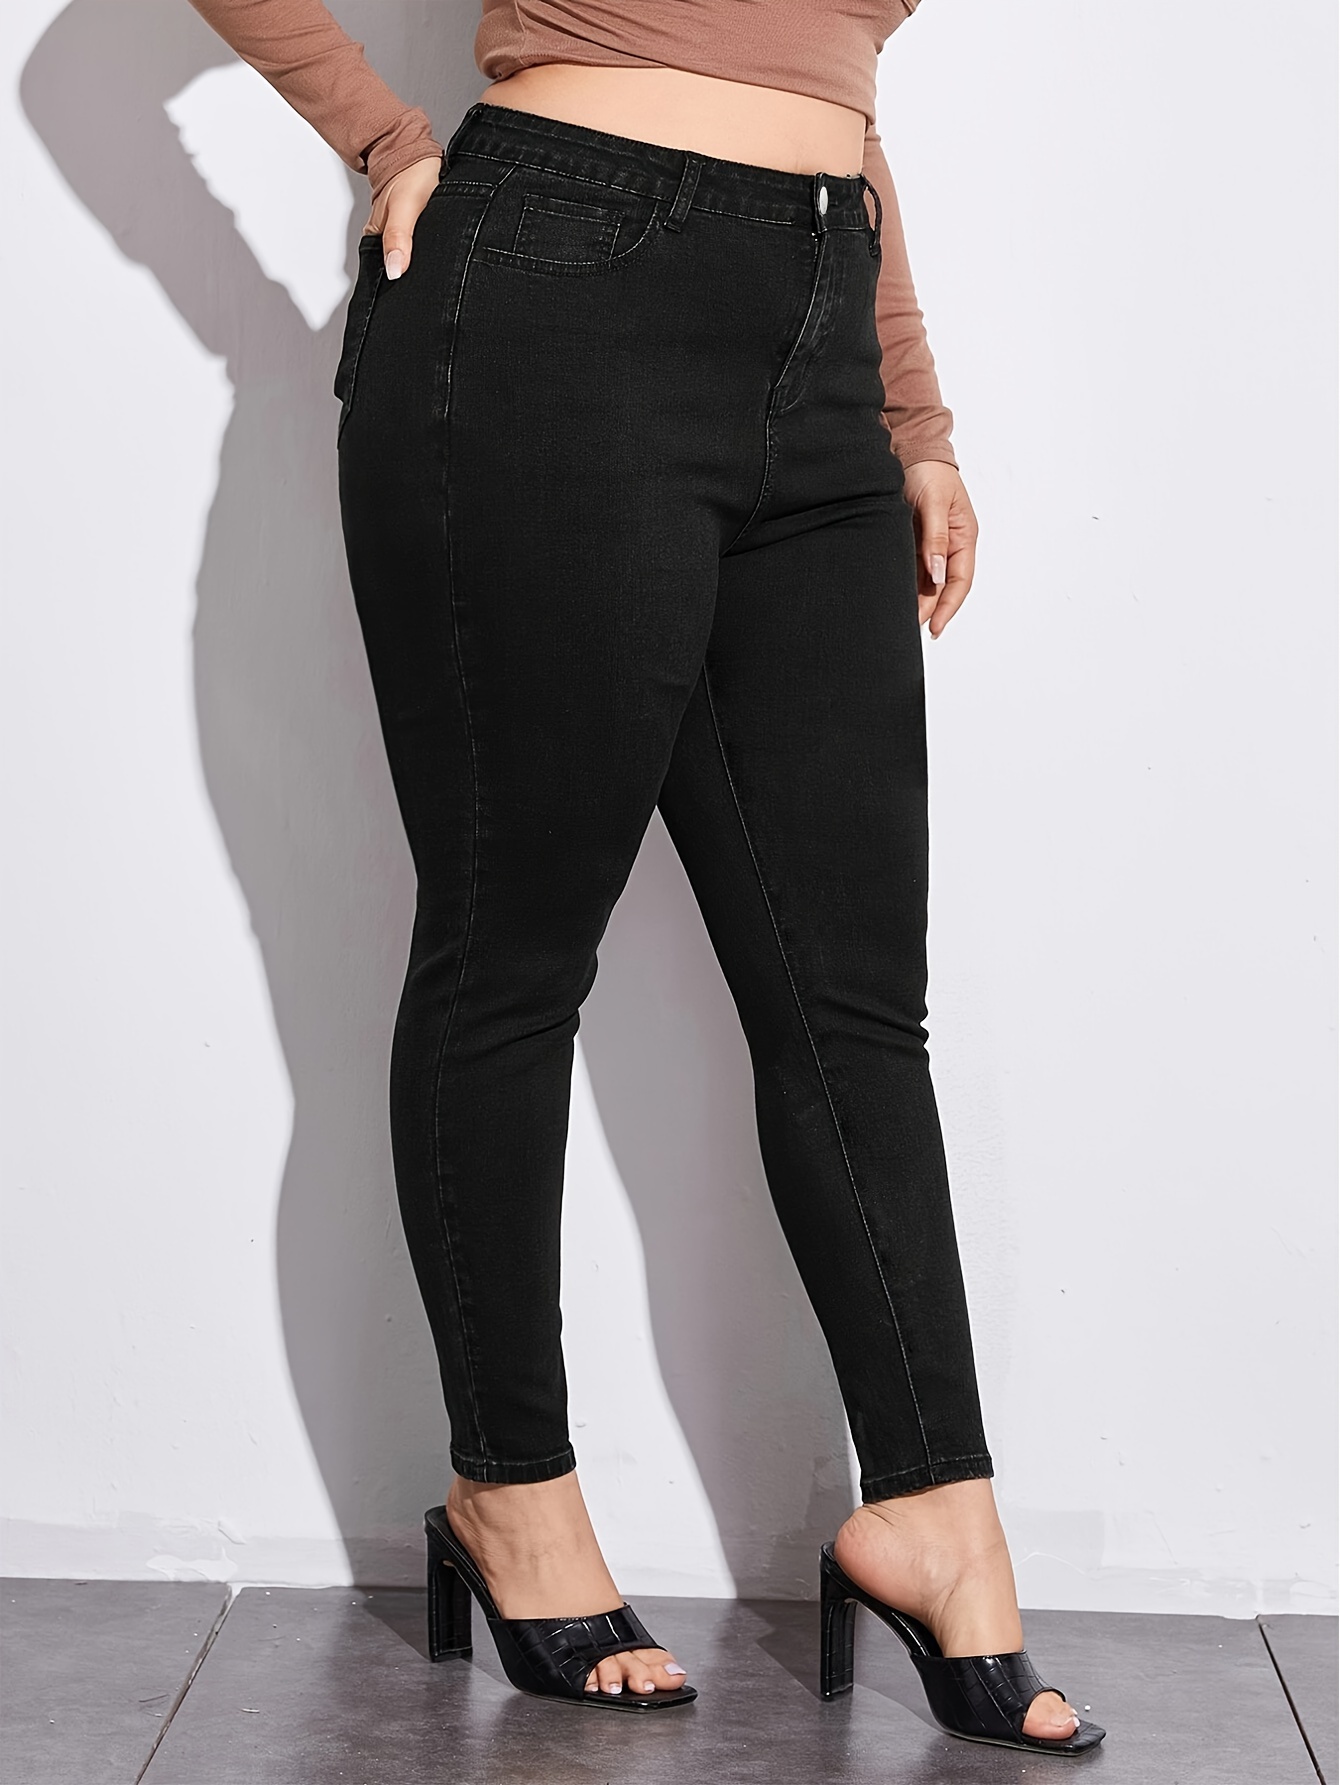 Women's Plus Size Cotton Jeans Look Skinny Jeggings Stretch Black Pants  Size 3XL